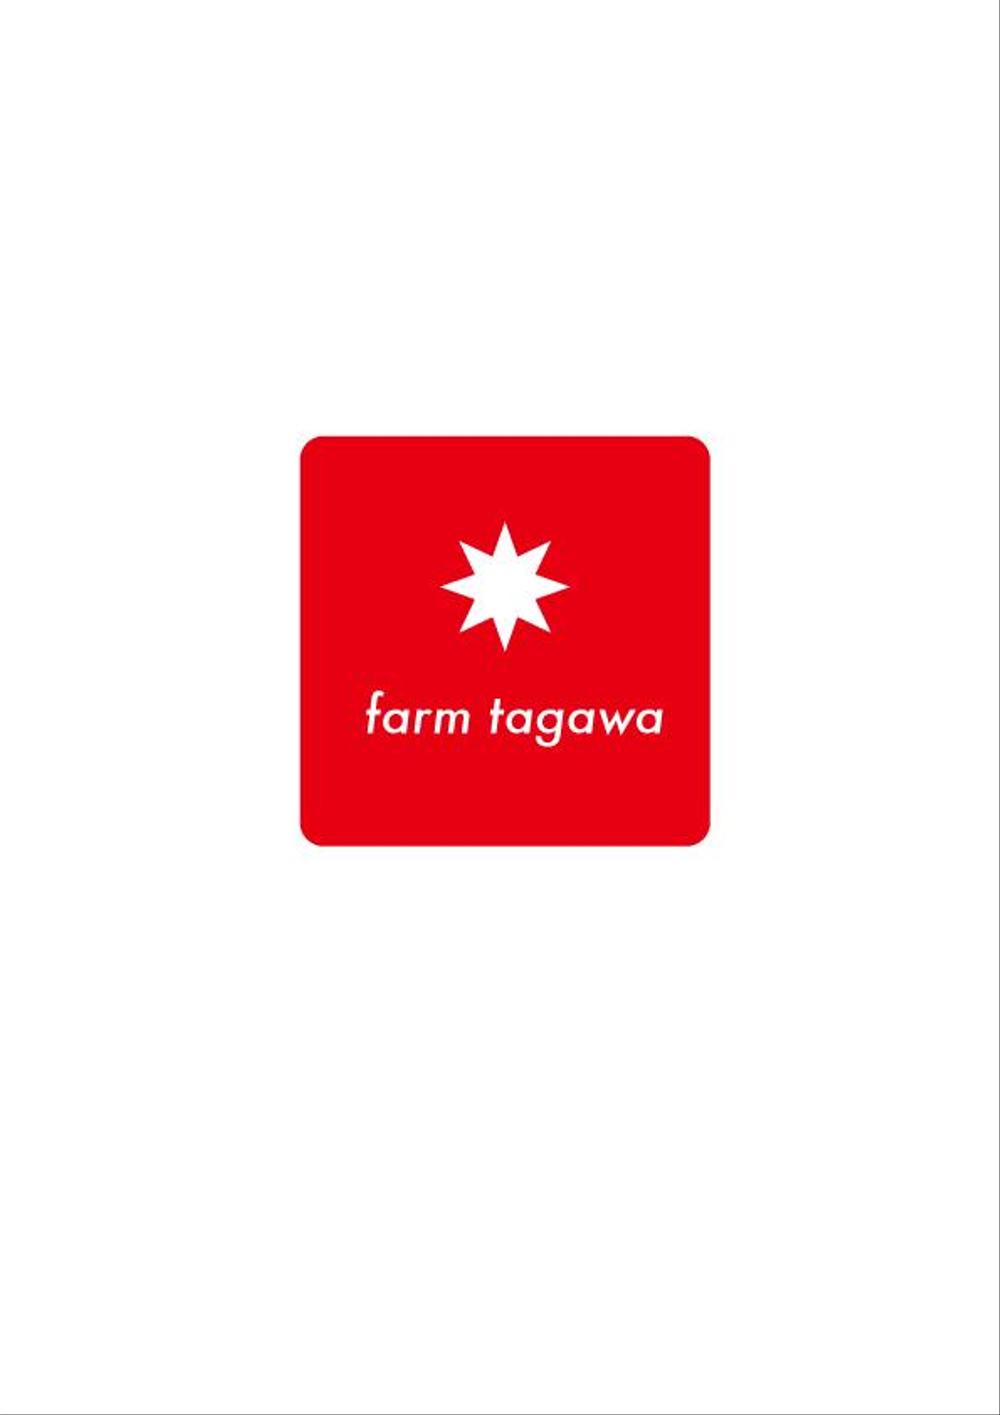 farmtagawa_logo.png